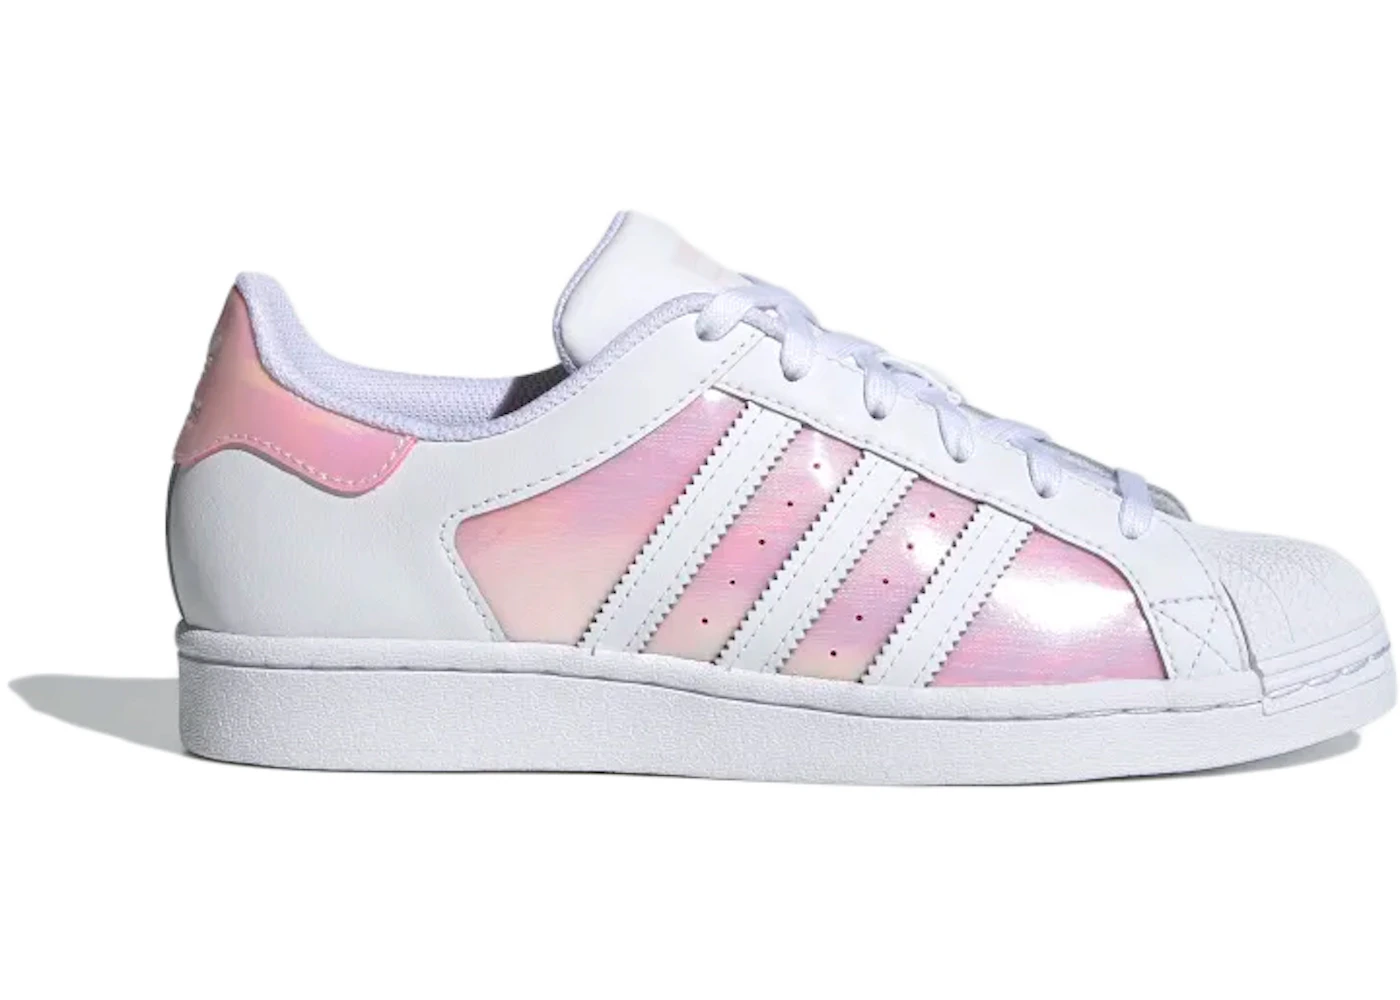 adidas Superstar White Clear Pink (Women's) - FX6042 - US